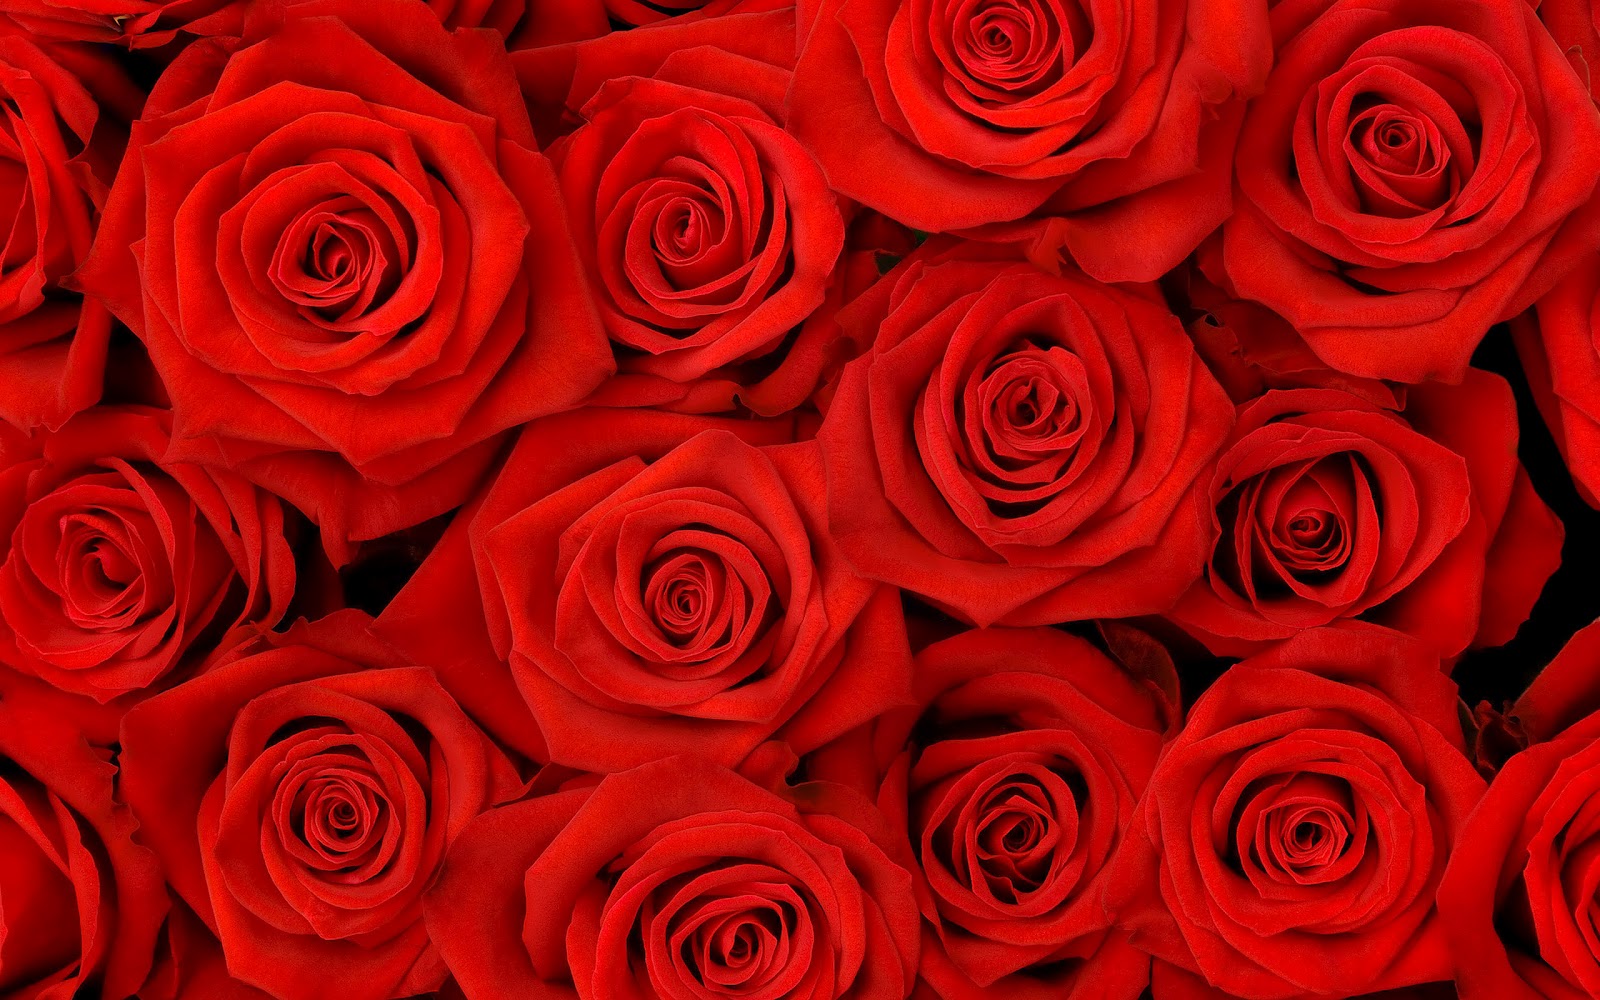  Roses  Hd  Wallpapers  Top Best HD  Wallpapers  for Desktop 